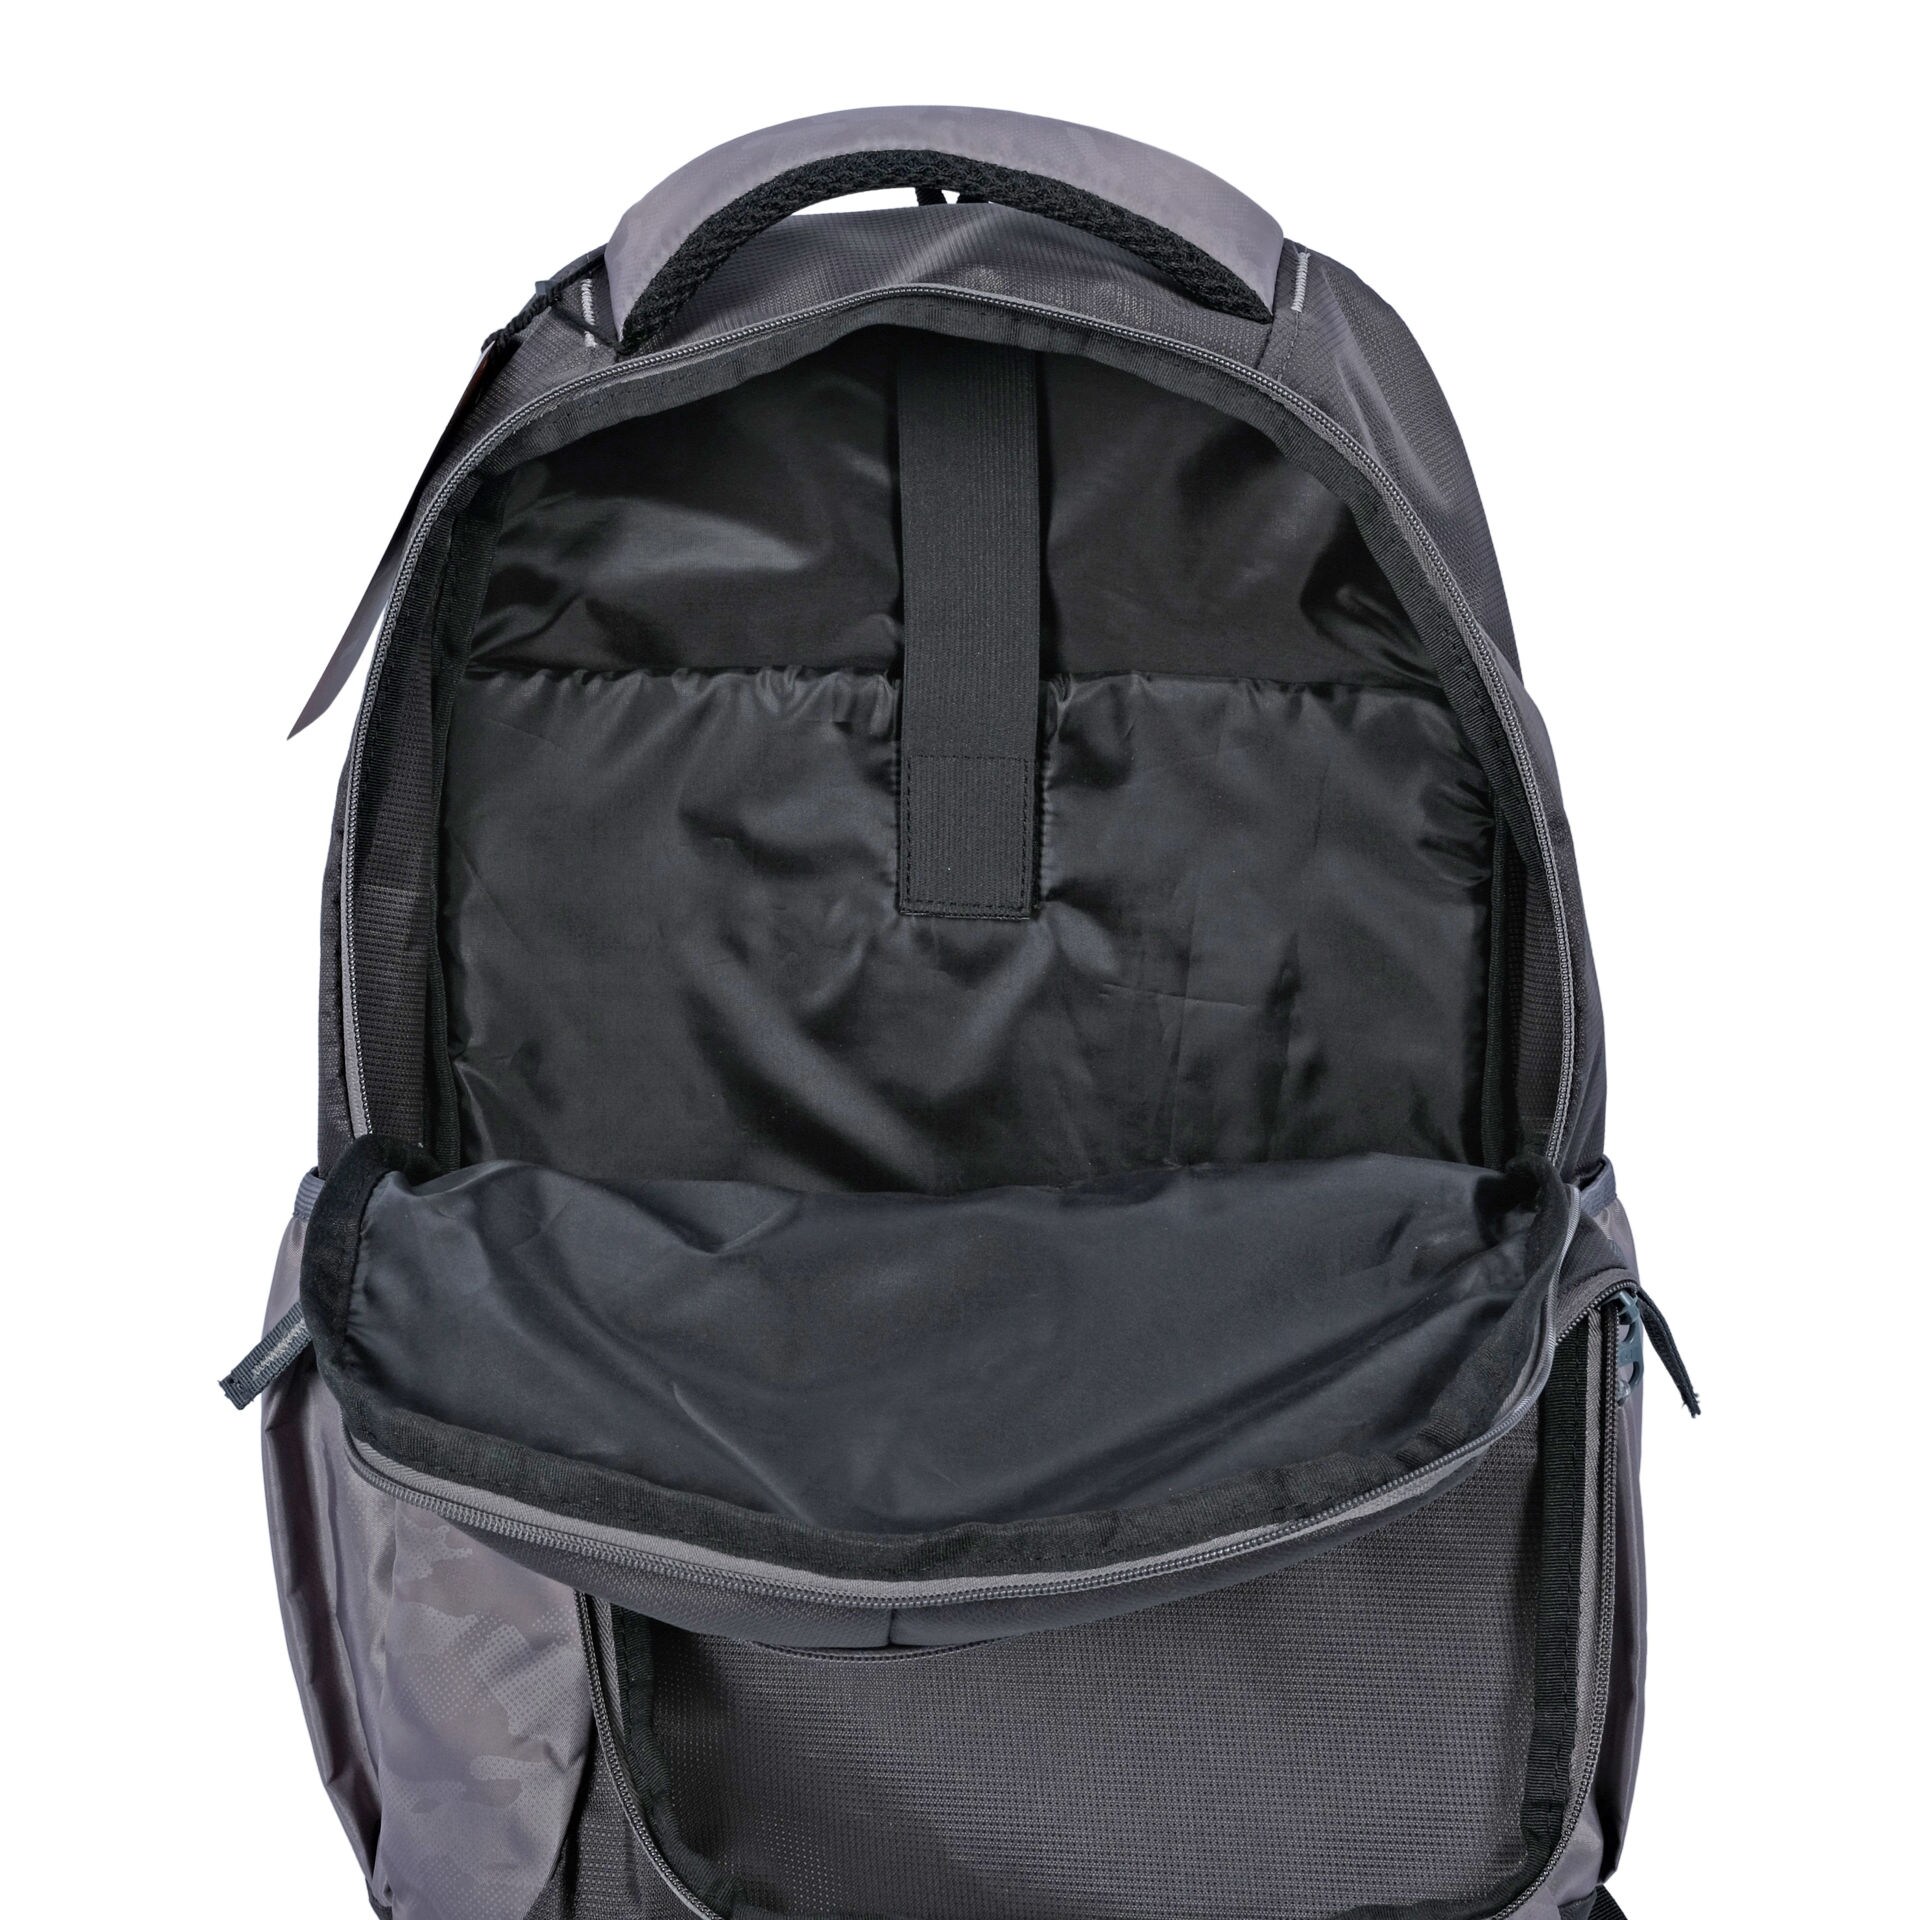 Shop Nu Gran Laptop Backpack with Camouflage Print | Dragon Mart UAE